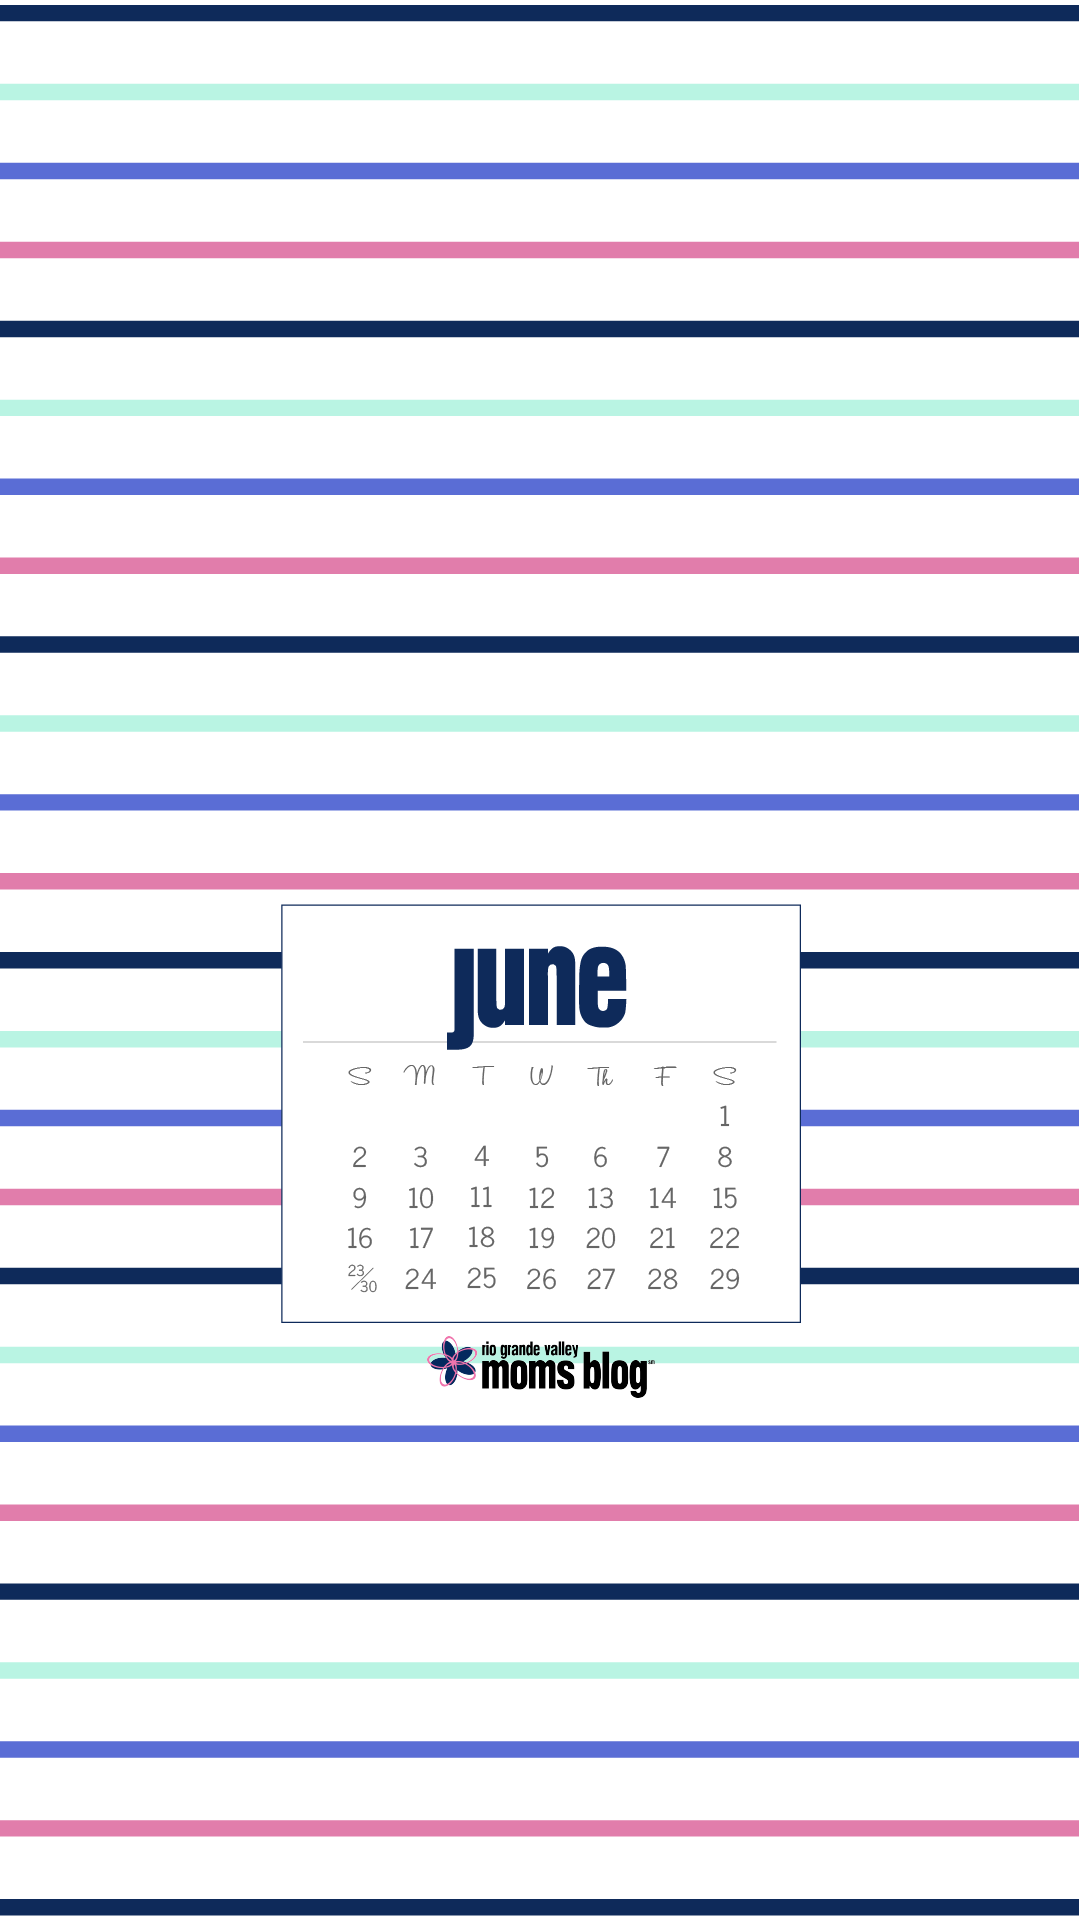 June 2019 - Calendar - Stripes